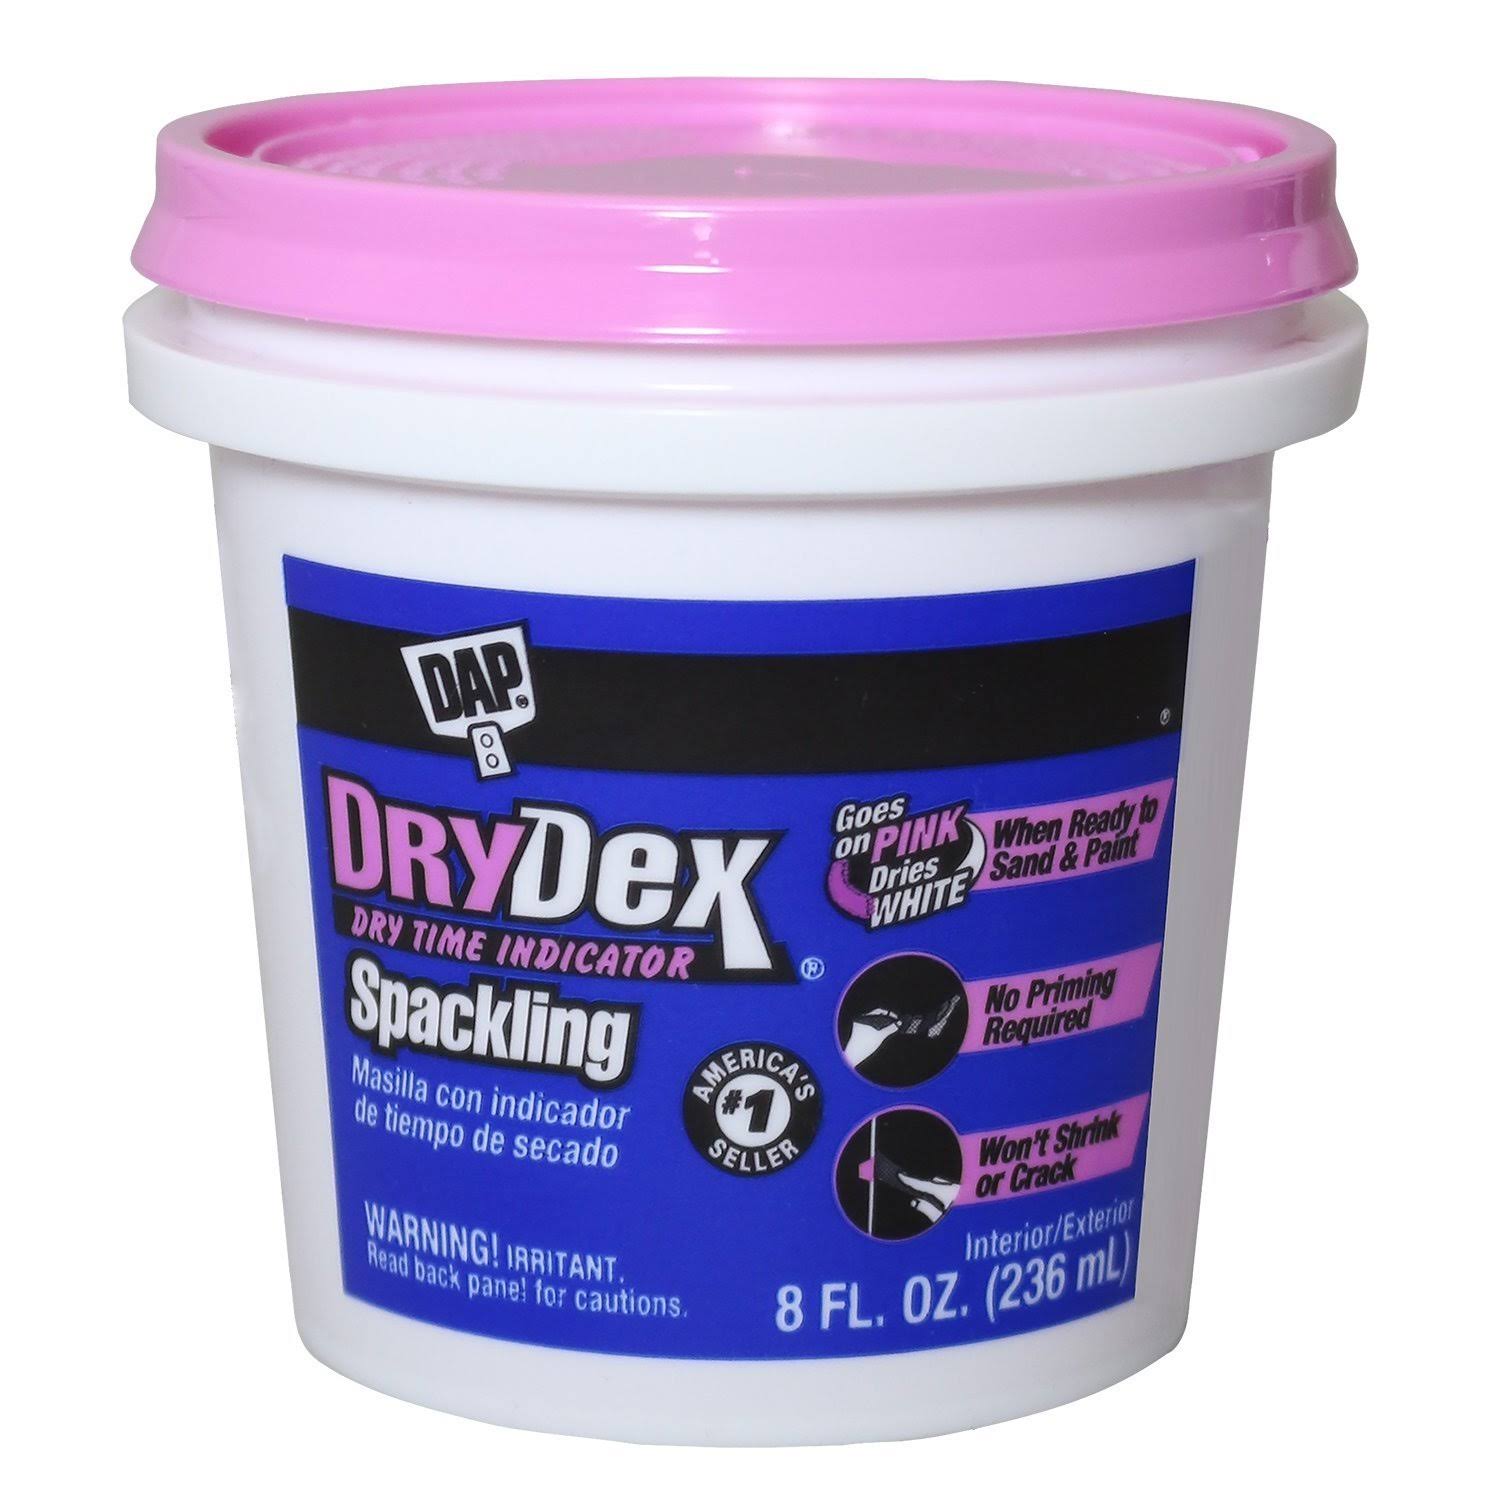 Dap DryDex Spackling - Interior/Exterior, 1/2 Pint